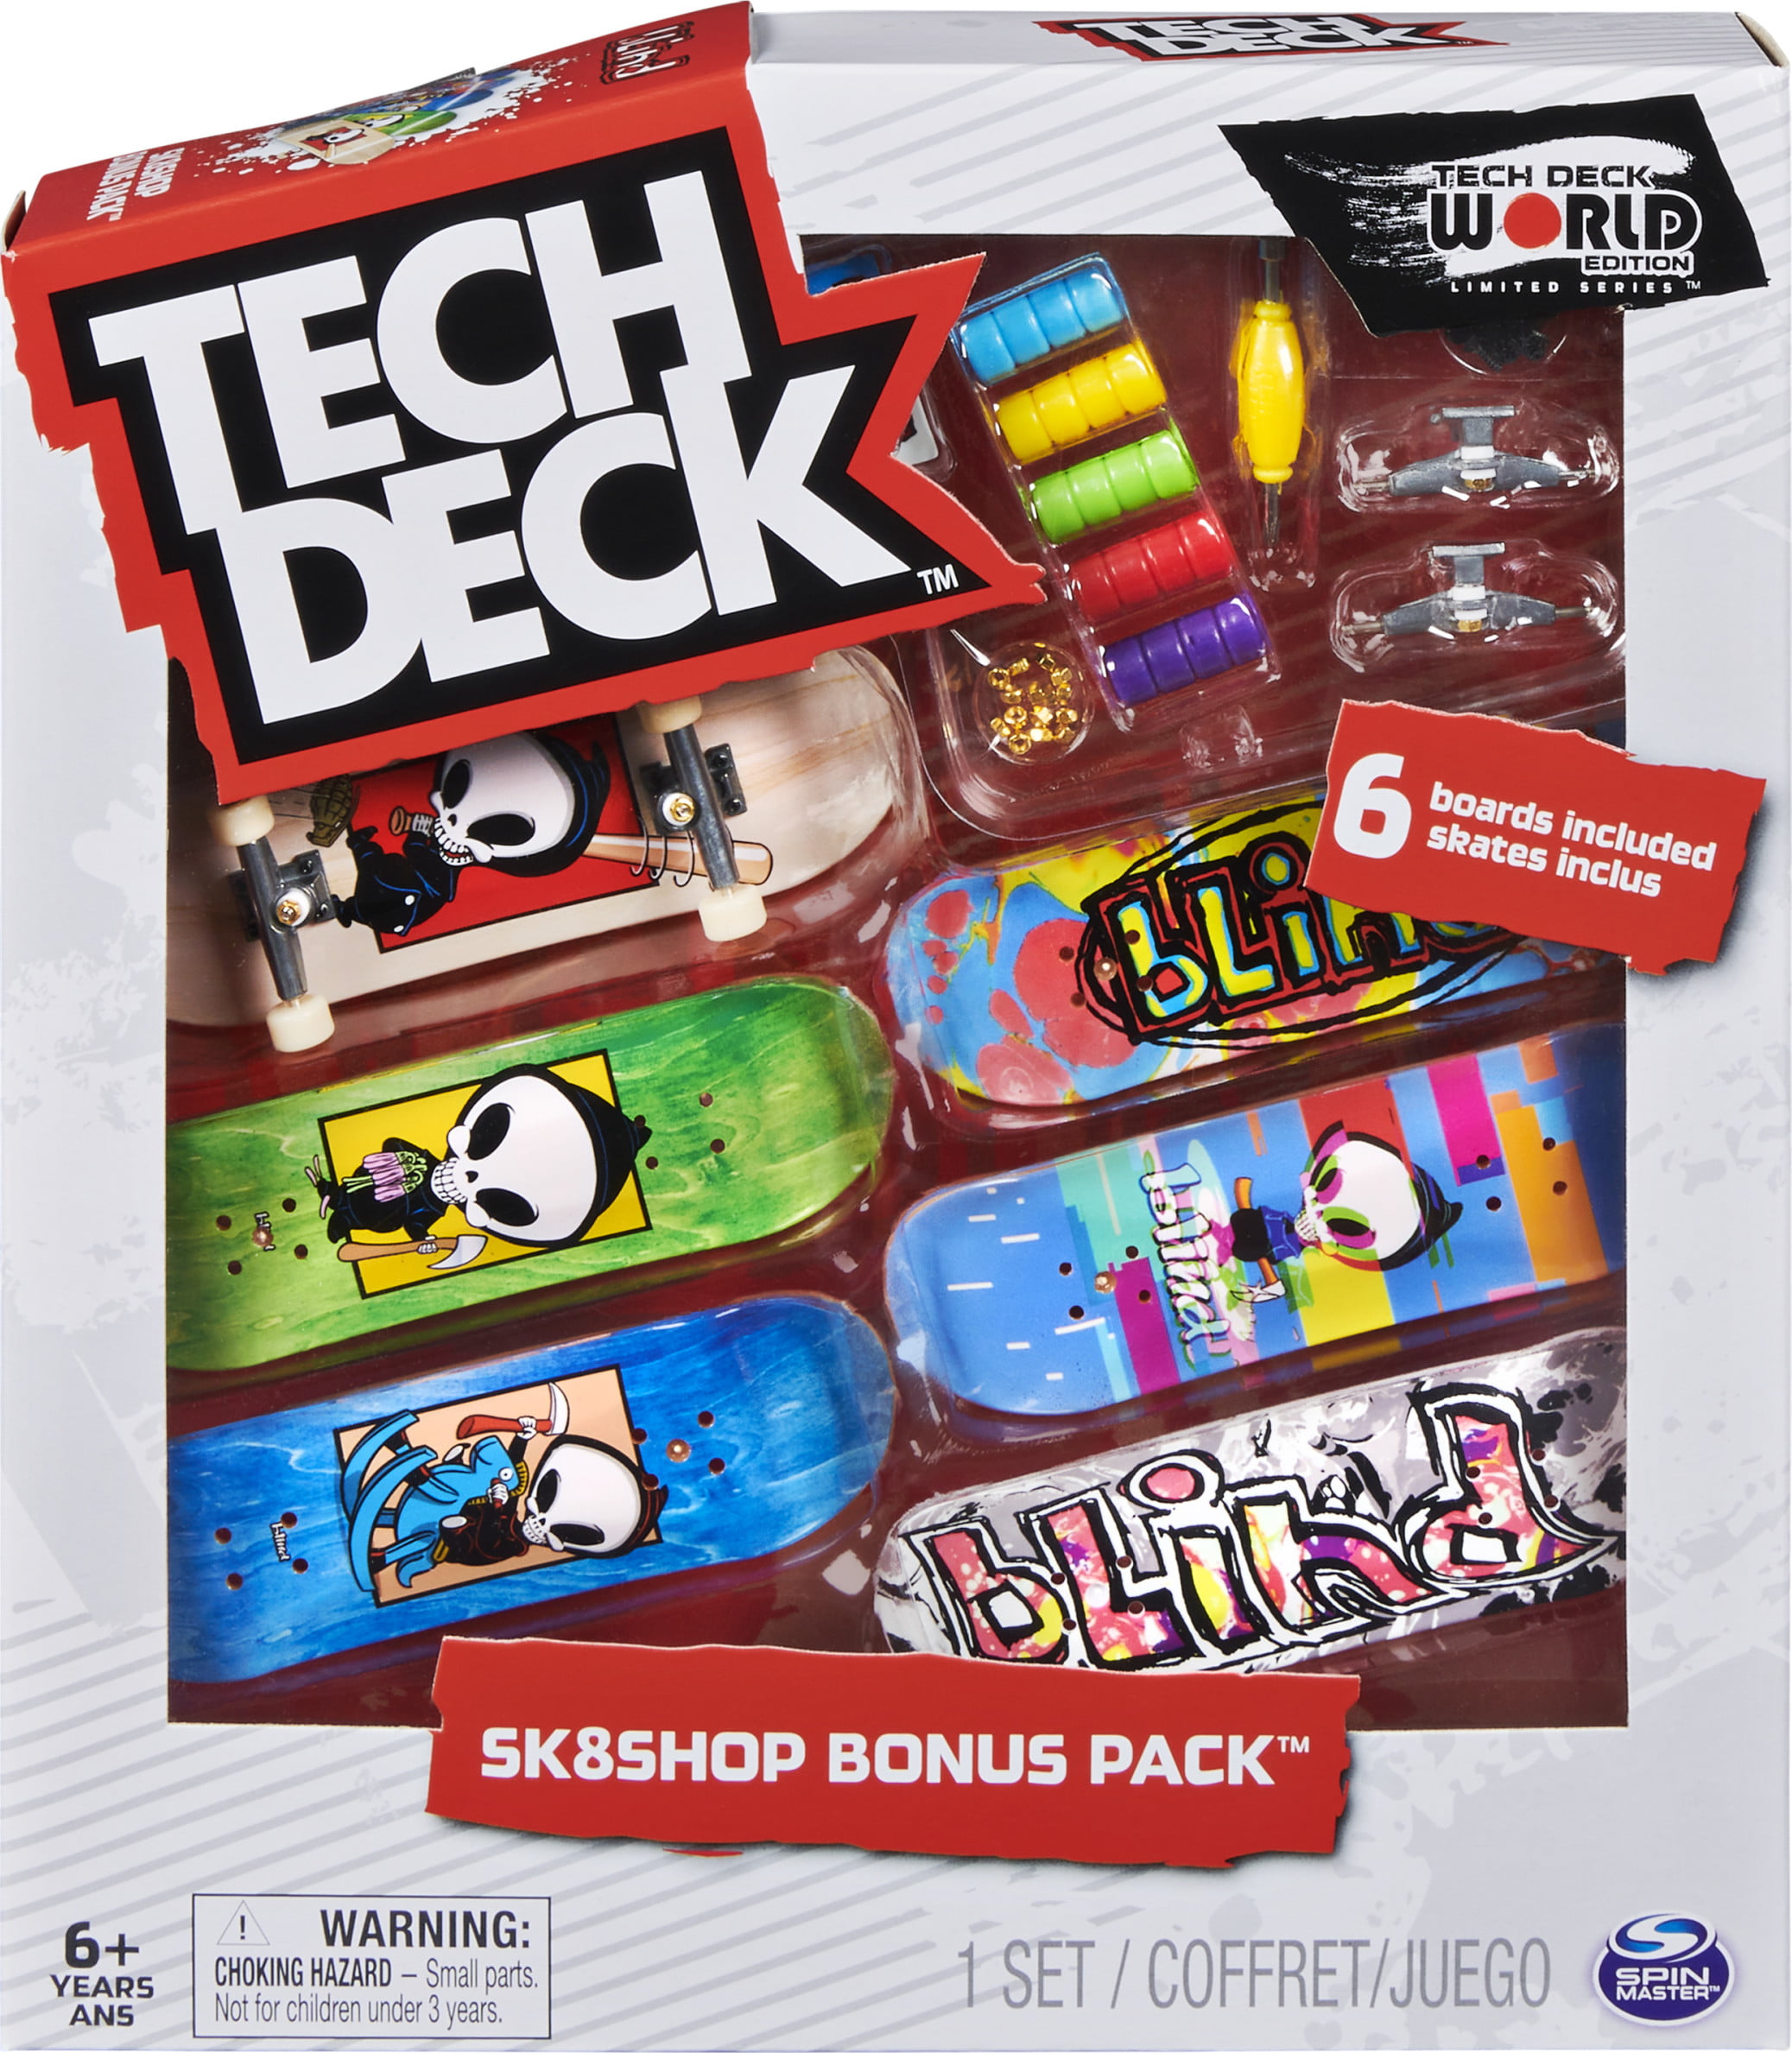 SG_B07J1Q1S73_US Tech Deck Baker Skateboards Sk8shop Bonus Pack 20th Anniversary 2018 Spinmaster Ltd 